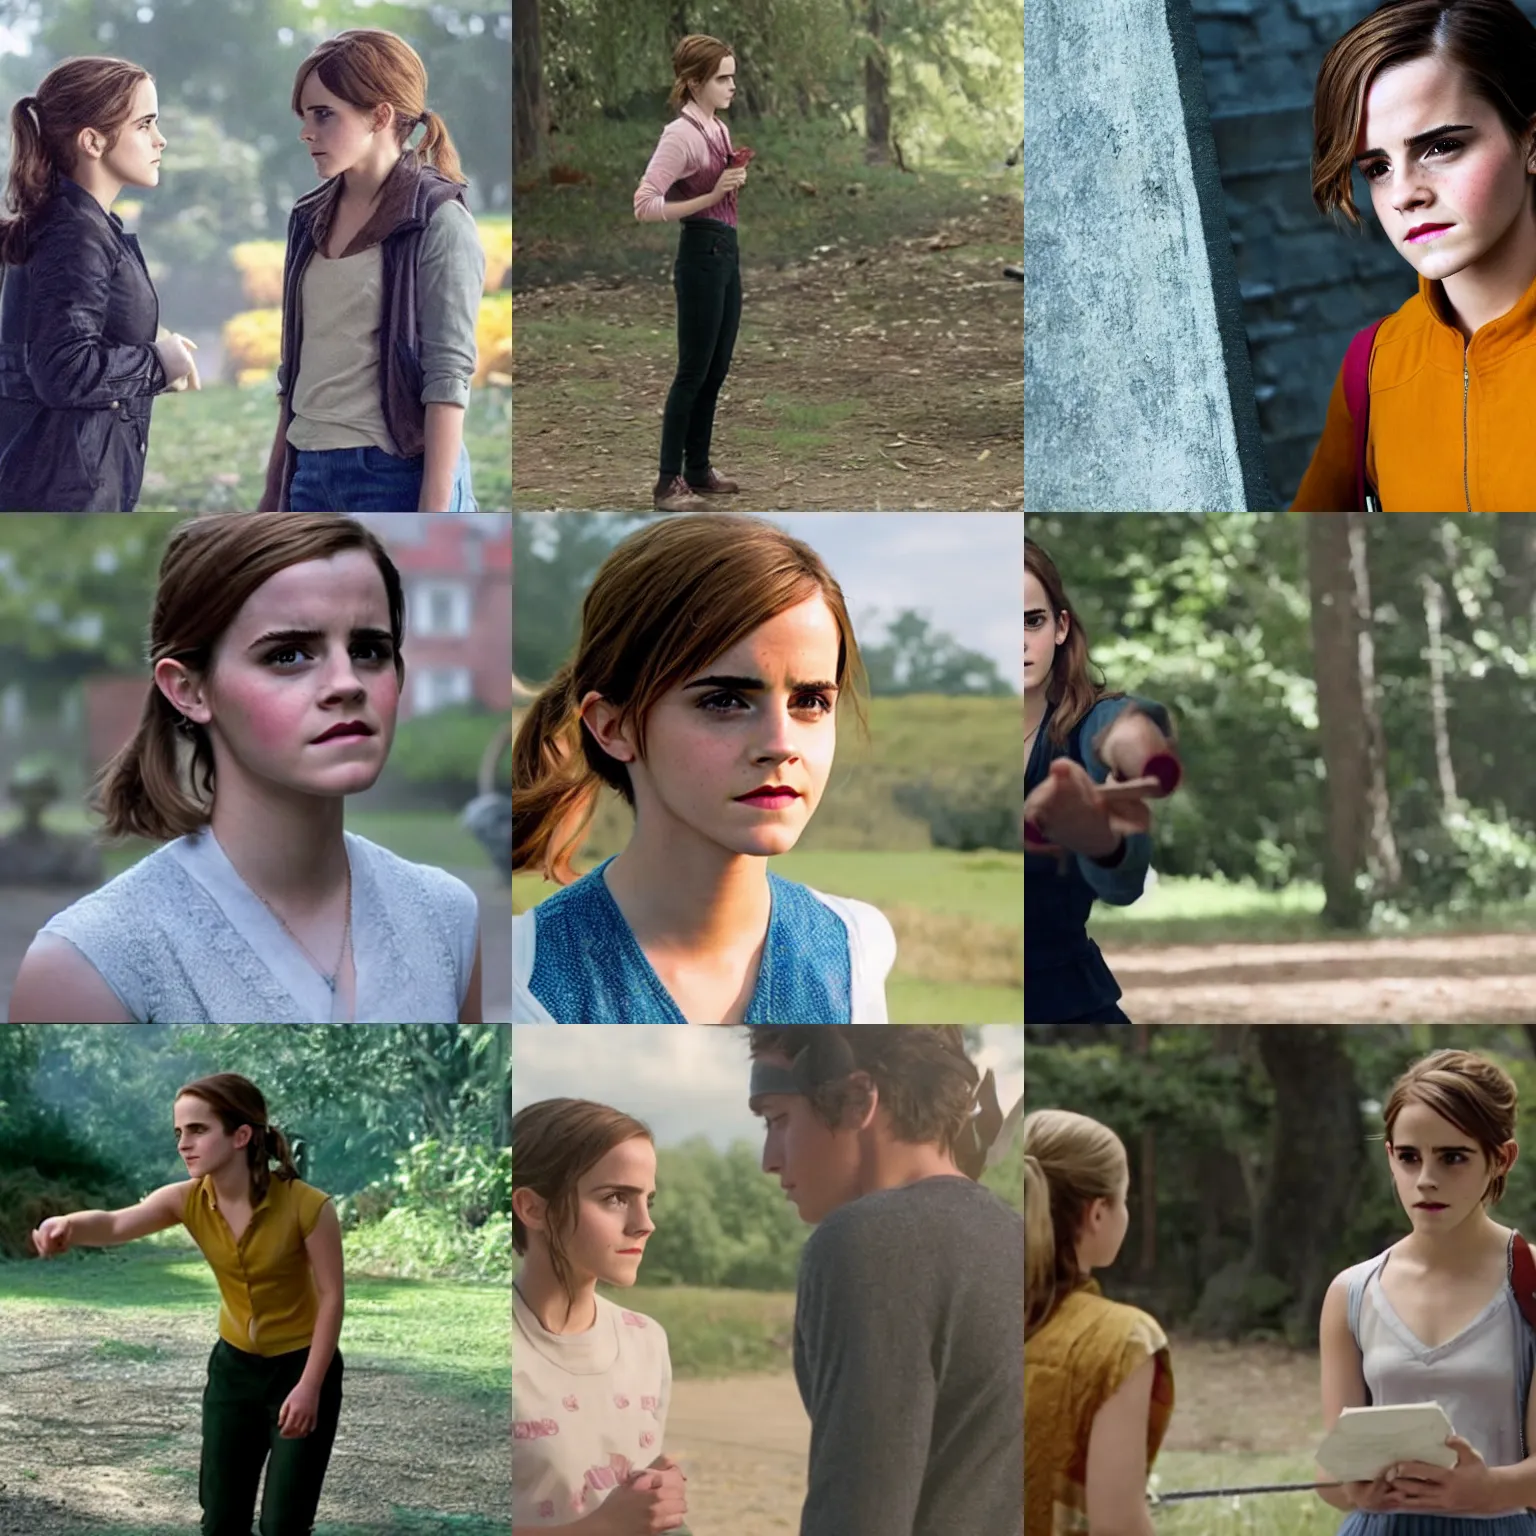 Prompt: Movie still of Emma Watson in Pokemon